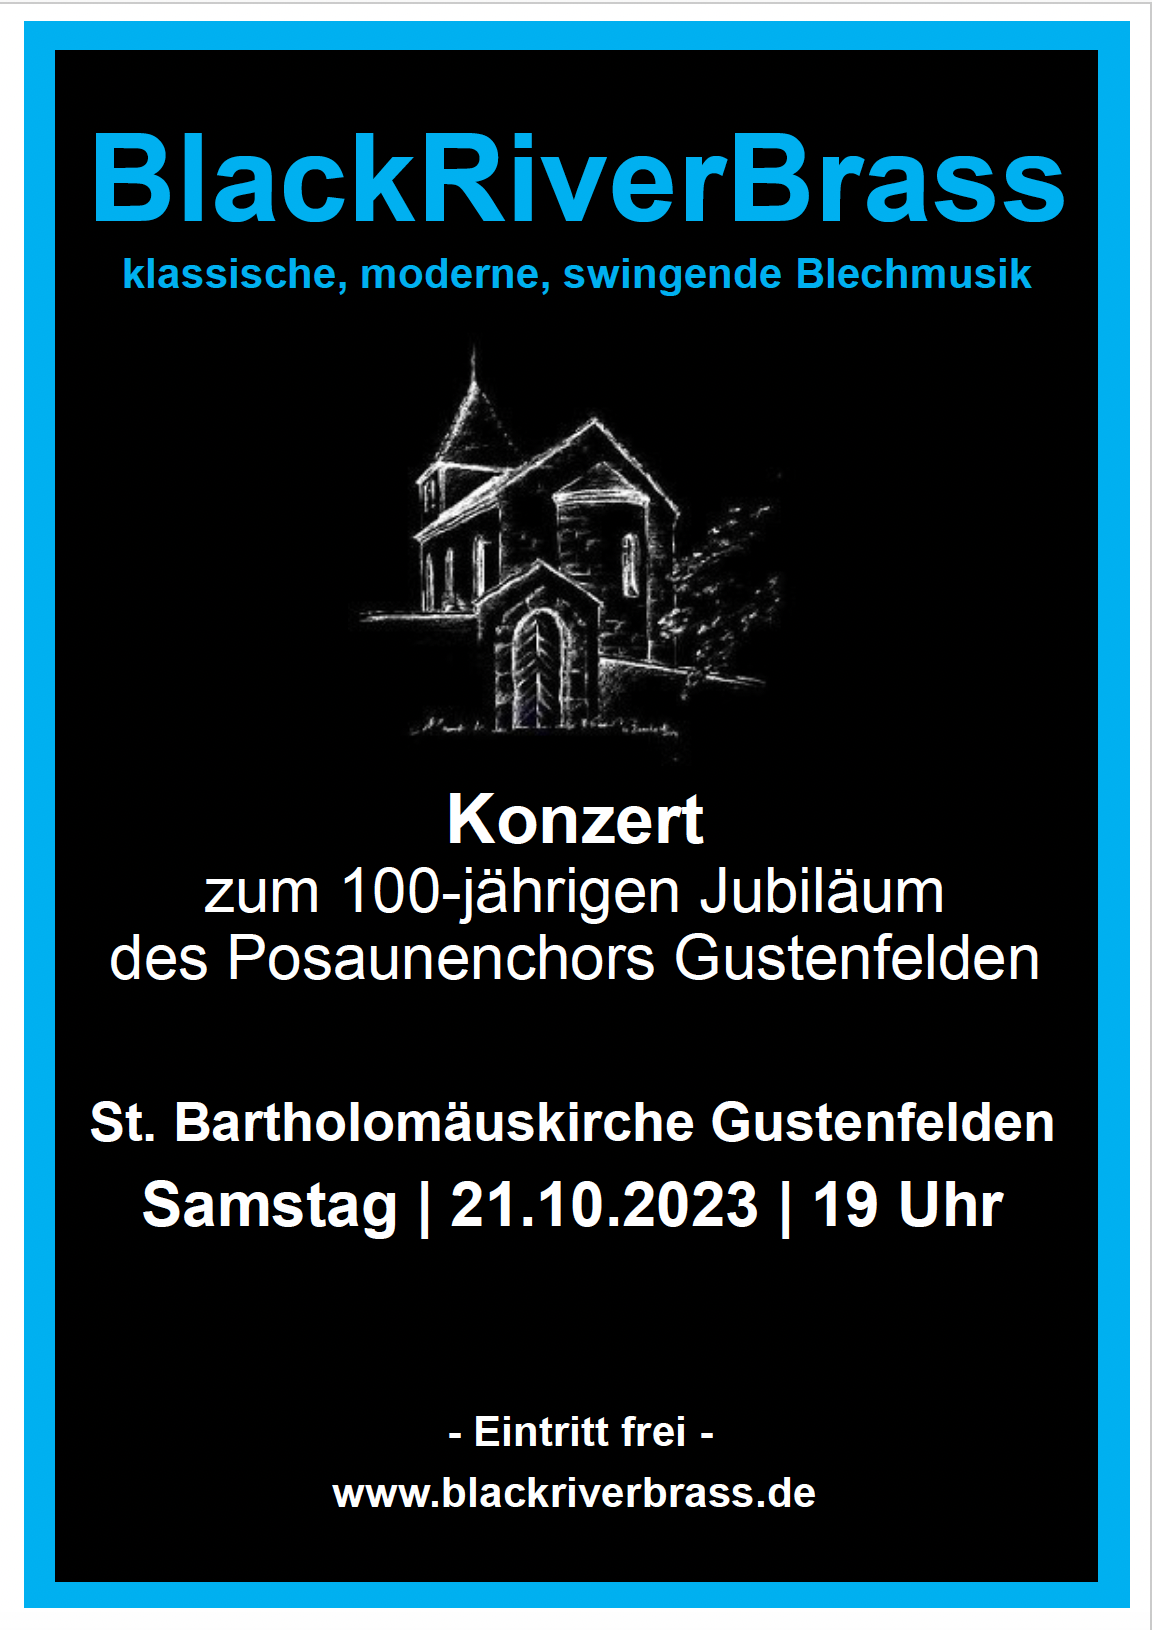 Konzertplakat - BlackRiverBrass in Gustenfelden, 100 Jahre Posaunenchor Gustenfelden